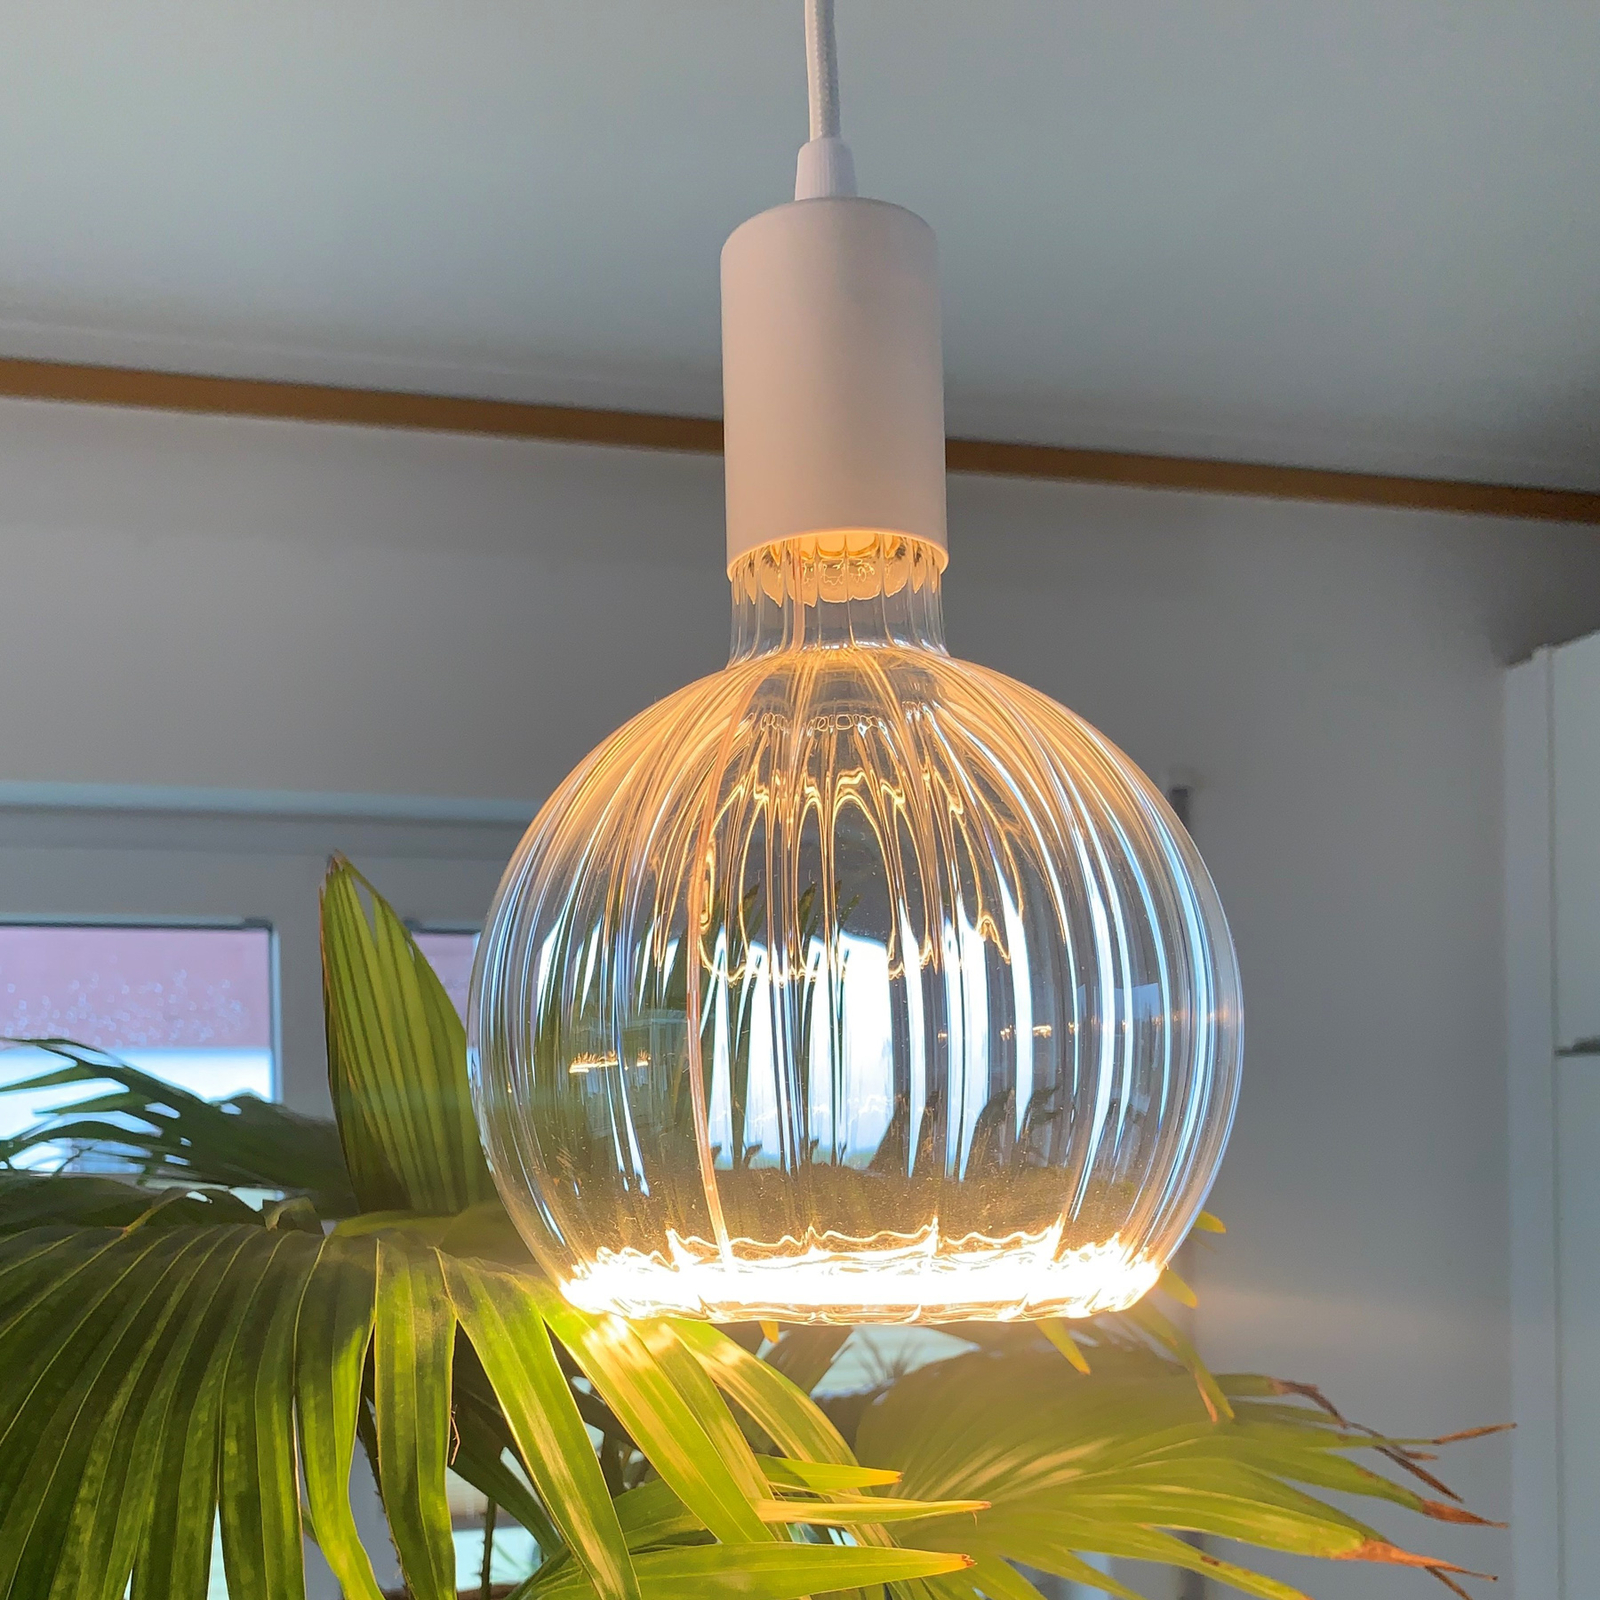 SEGULA floating LED bulb G150 E27 4W straight gold